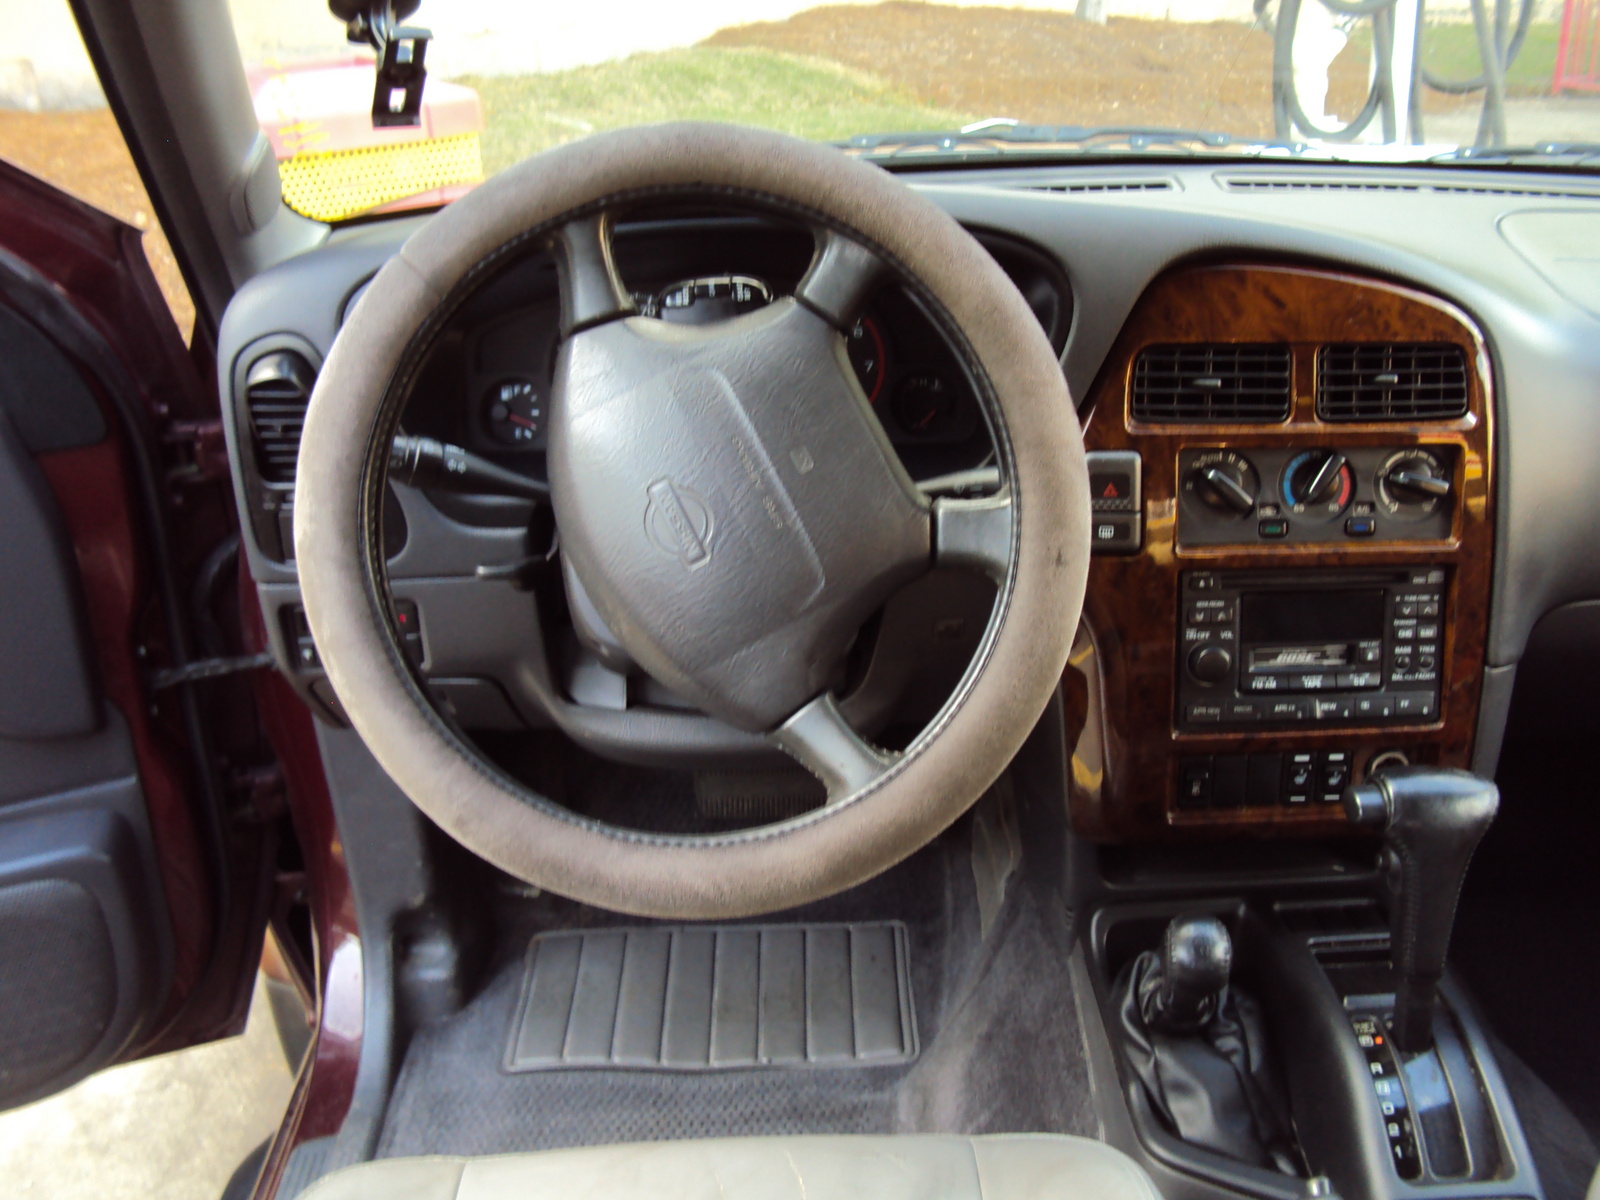 1997 Nissan pathfinder interior dimensions